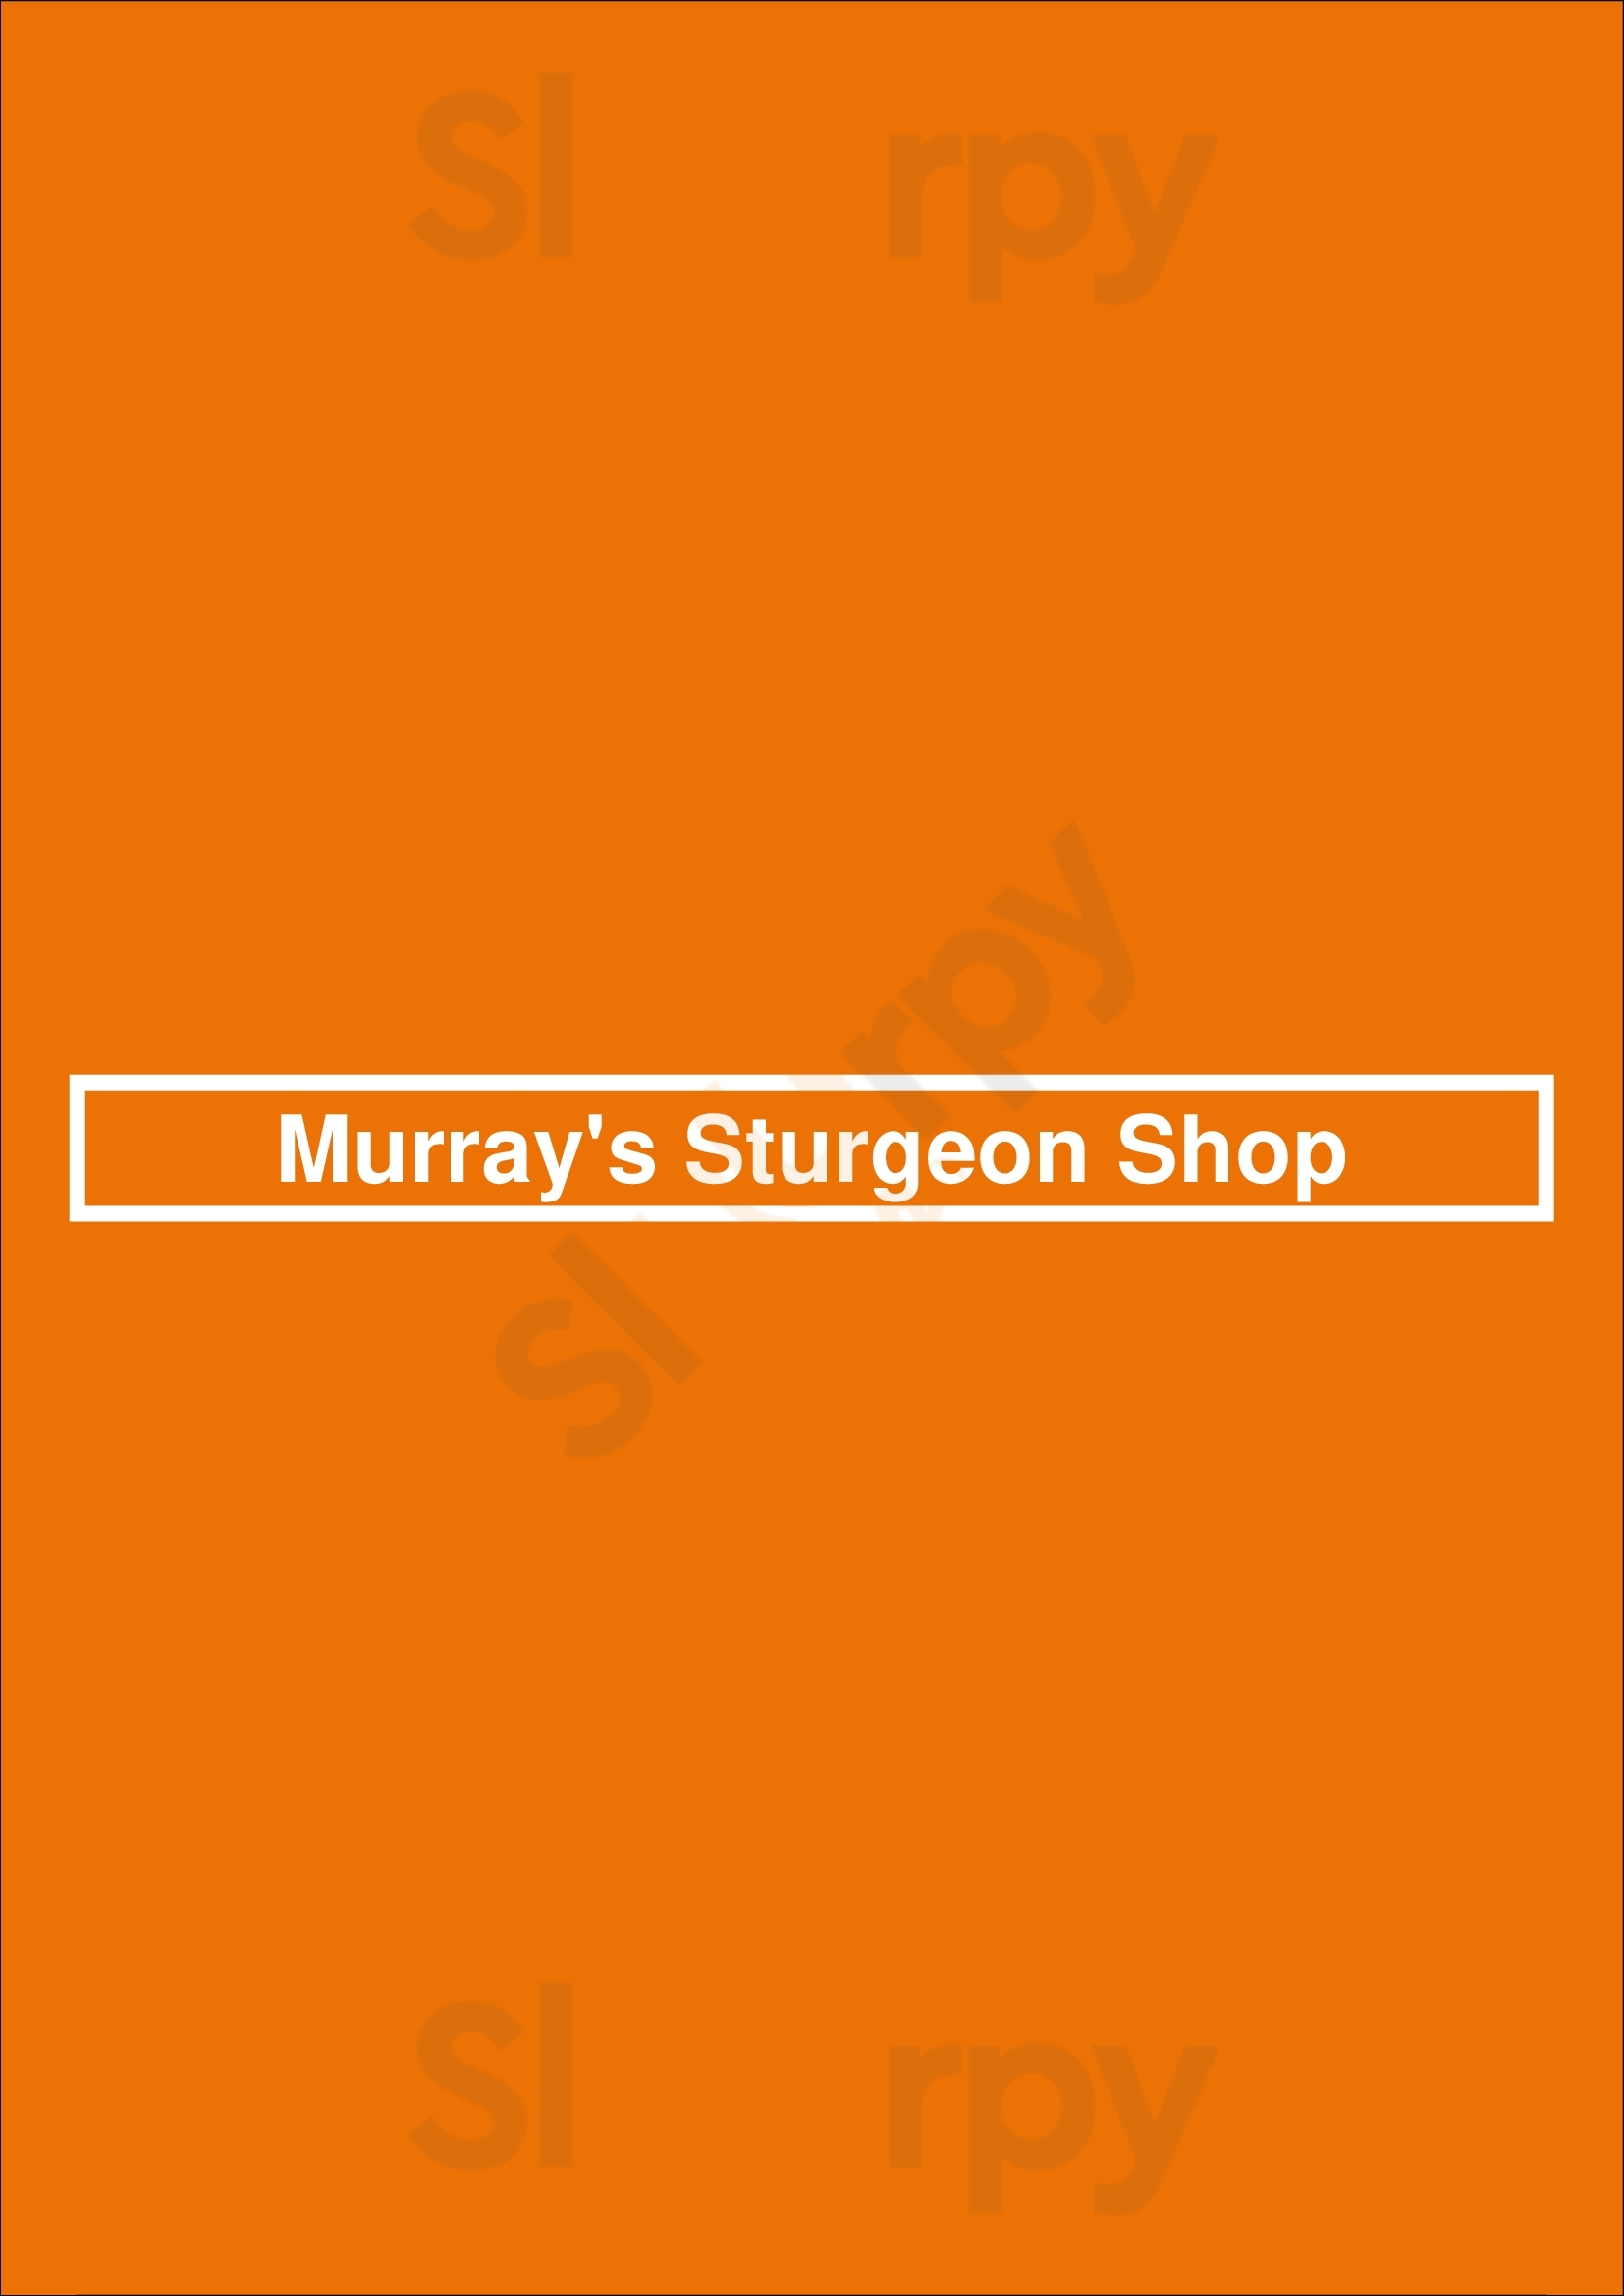 Murray's Sturgeon Shop New York City Menu - 1